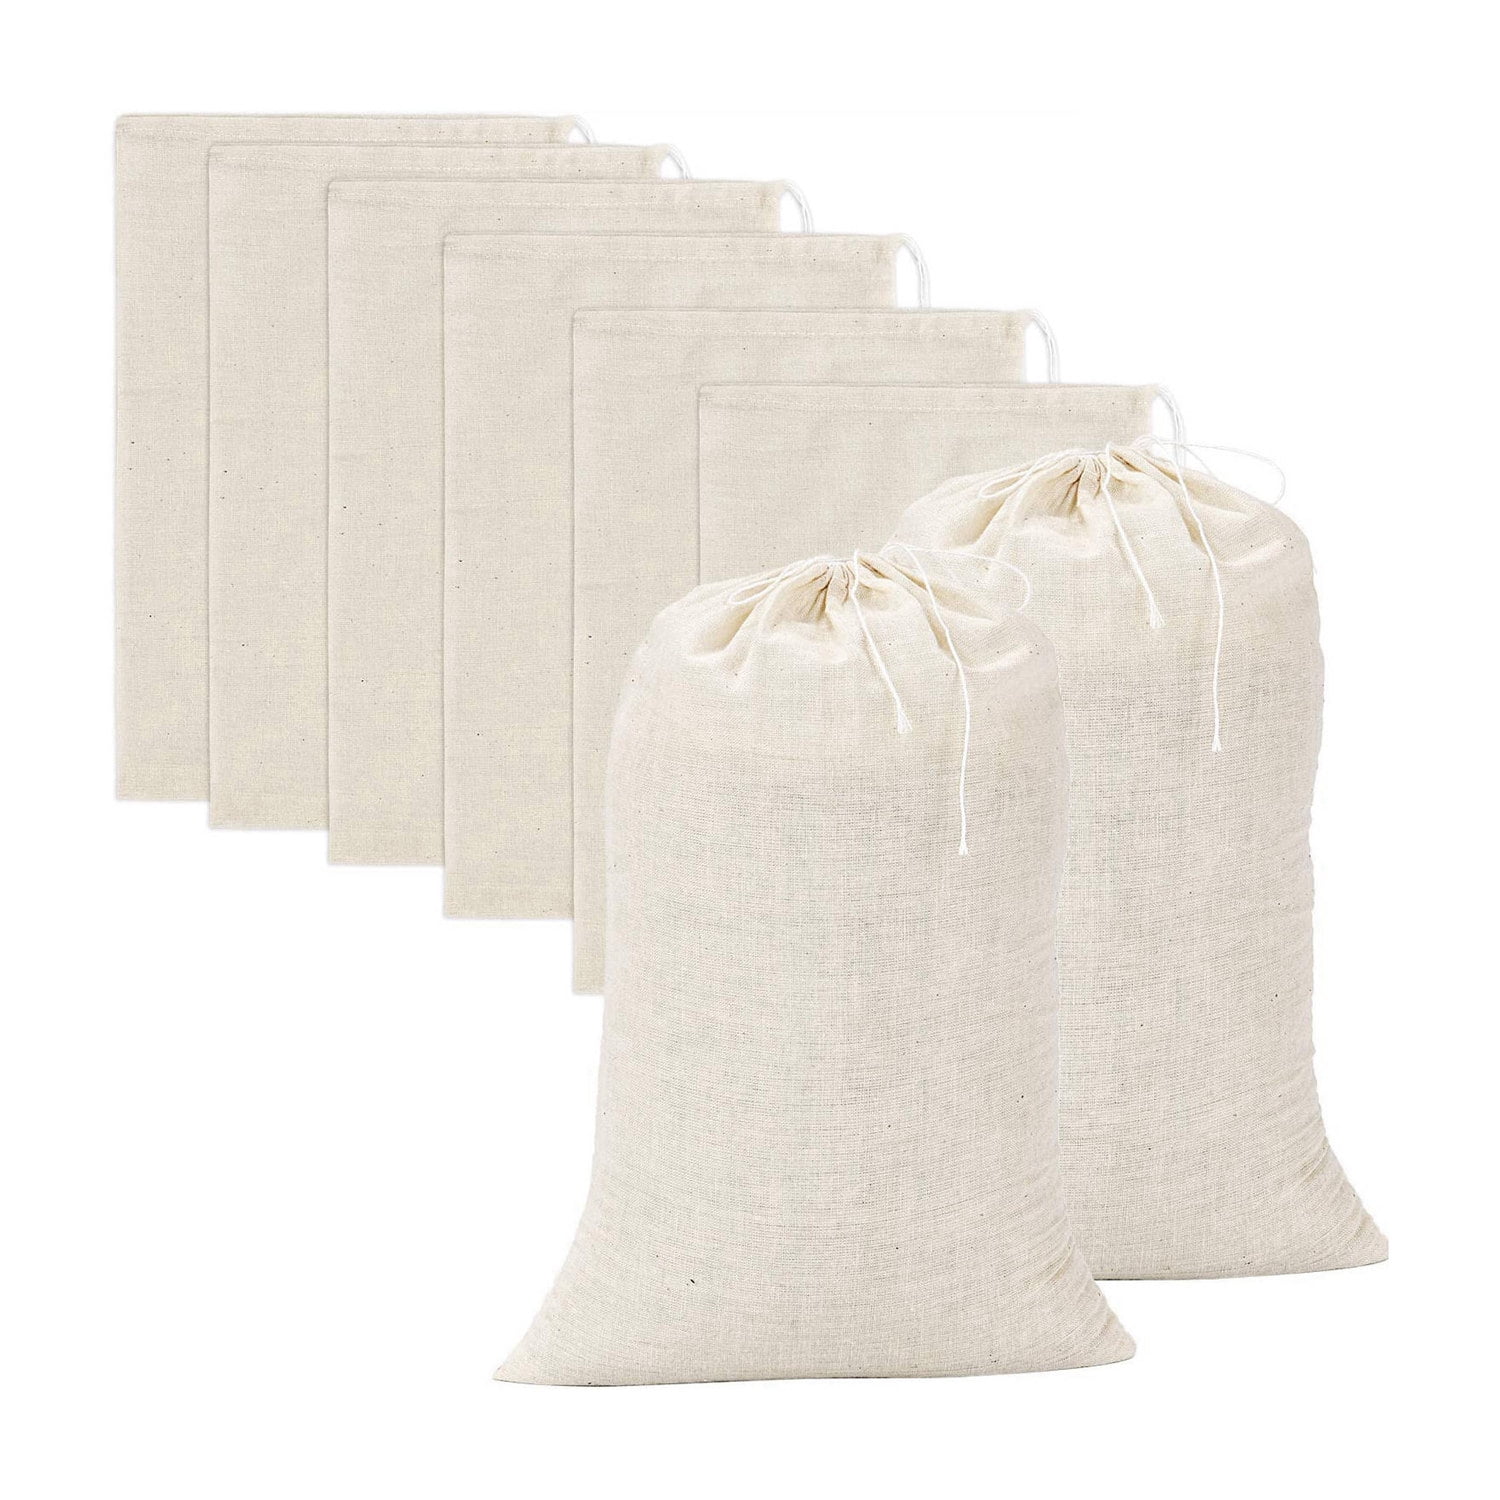 10pcs LARGE 10x12 inch Cotton Muslin Drawstring Reusable Bags 